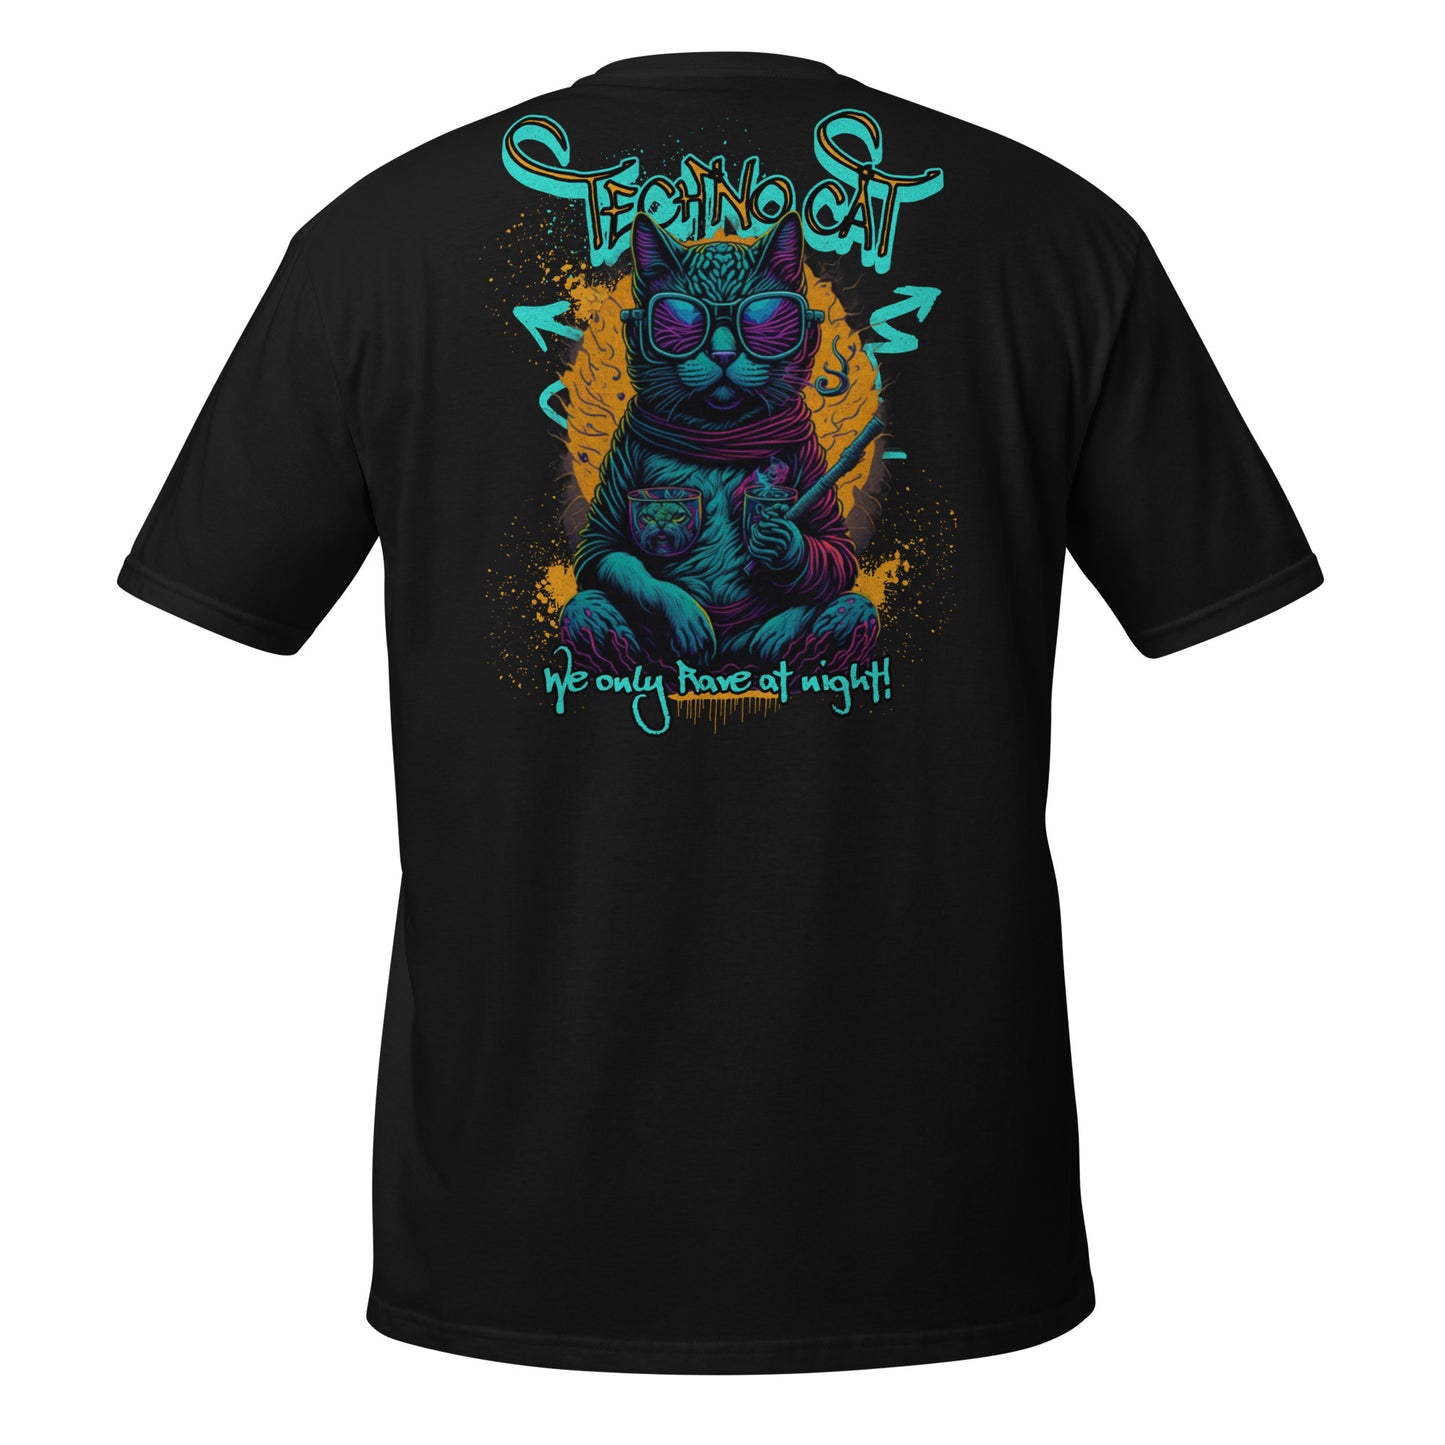 Rave at night cat - Unisex T-Shirt